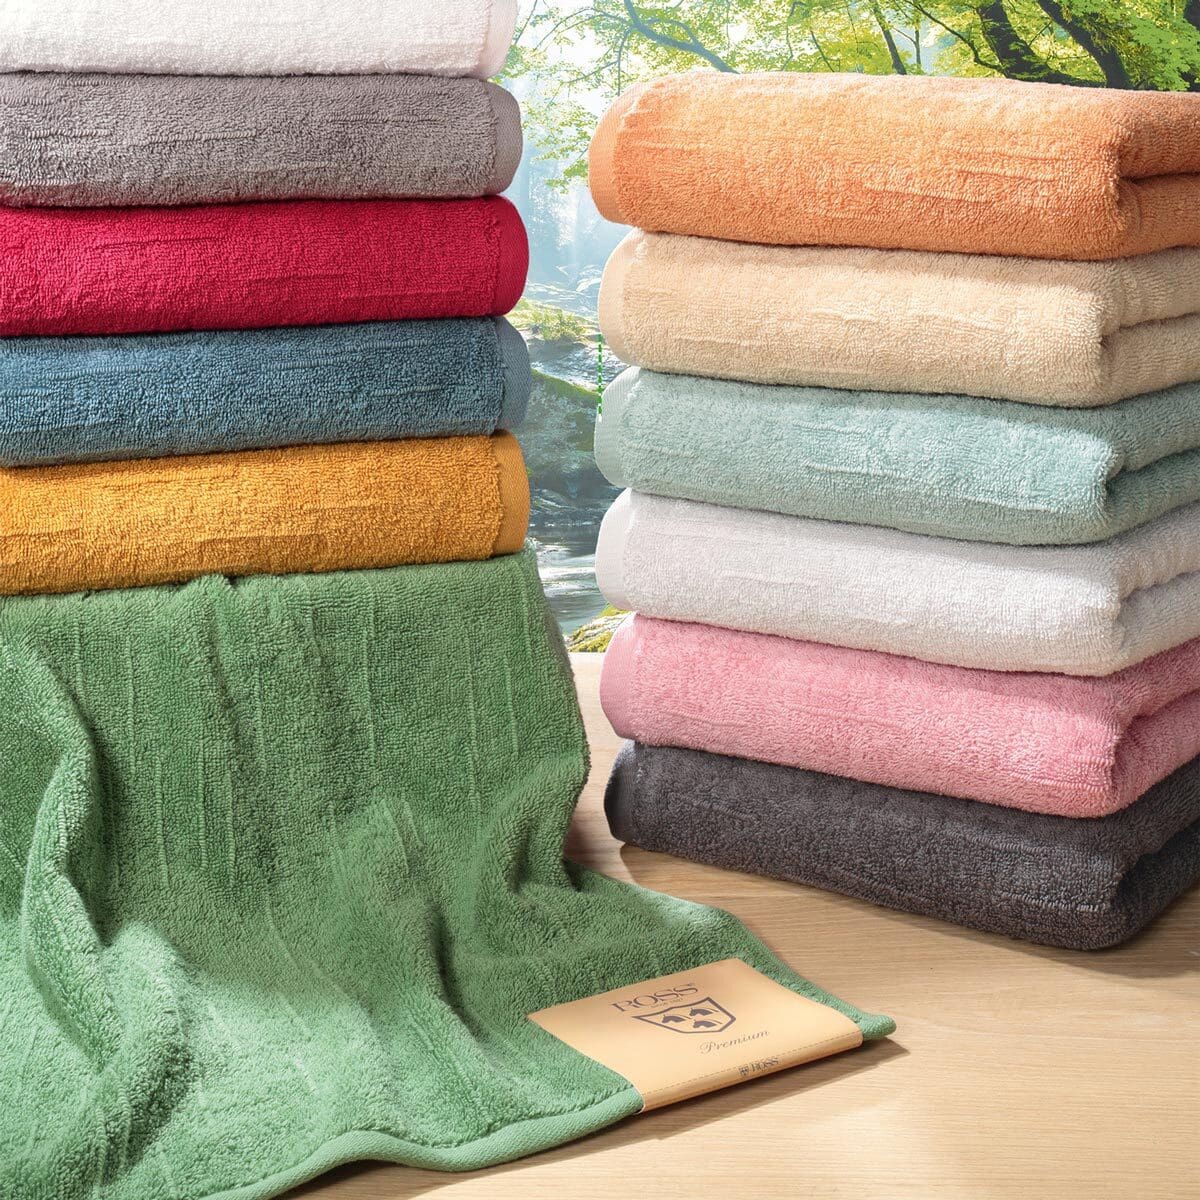 Ross Premium Uni Handtücher Boucle online kaufen Shop bei günstig Bettwaren